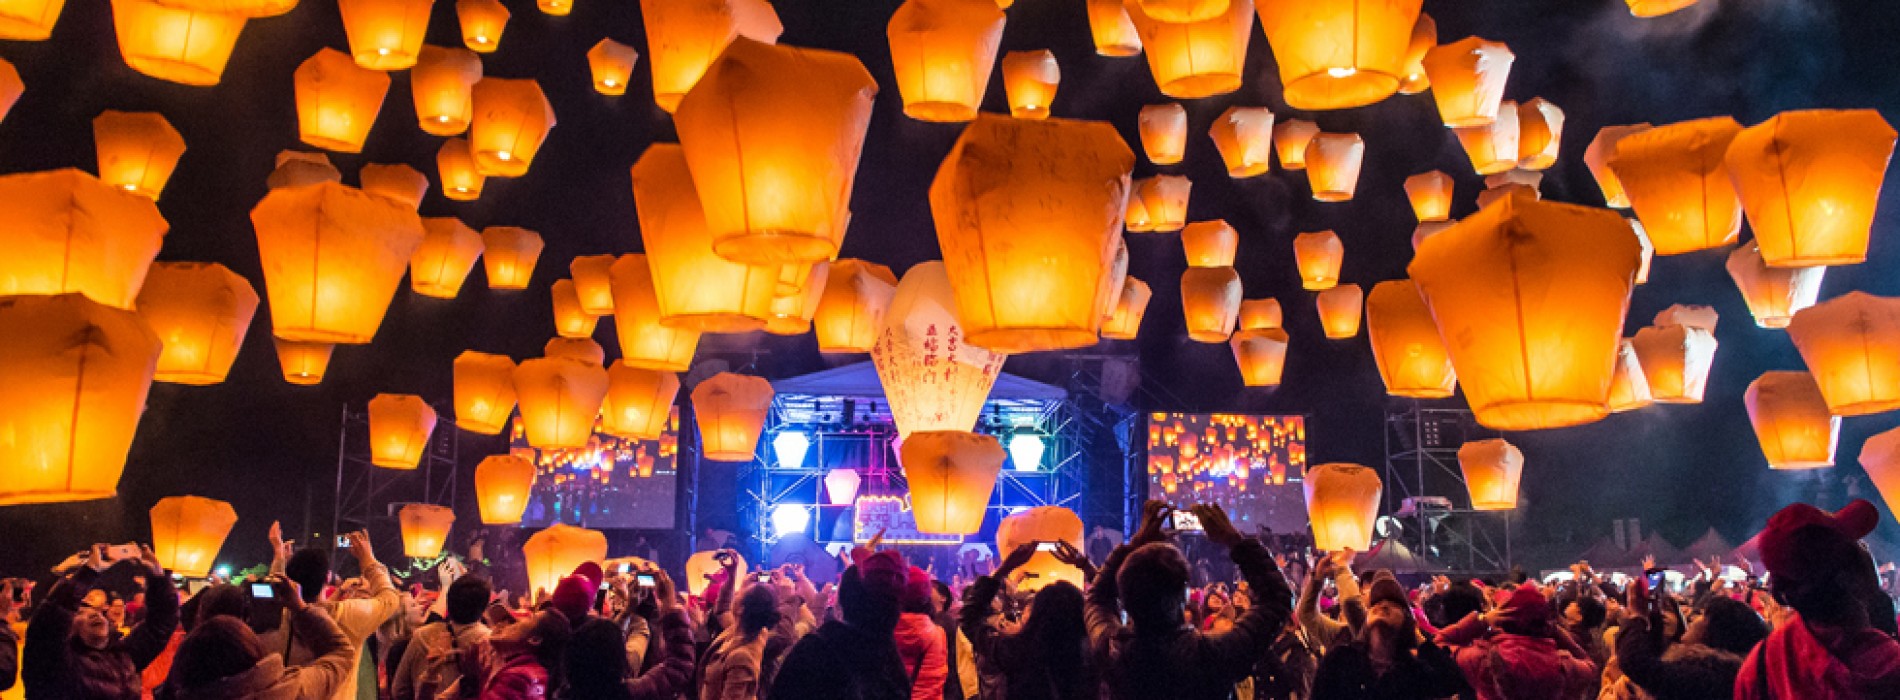 Celebrate the 2018 Taiwan Lantern Festival!